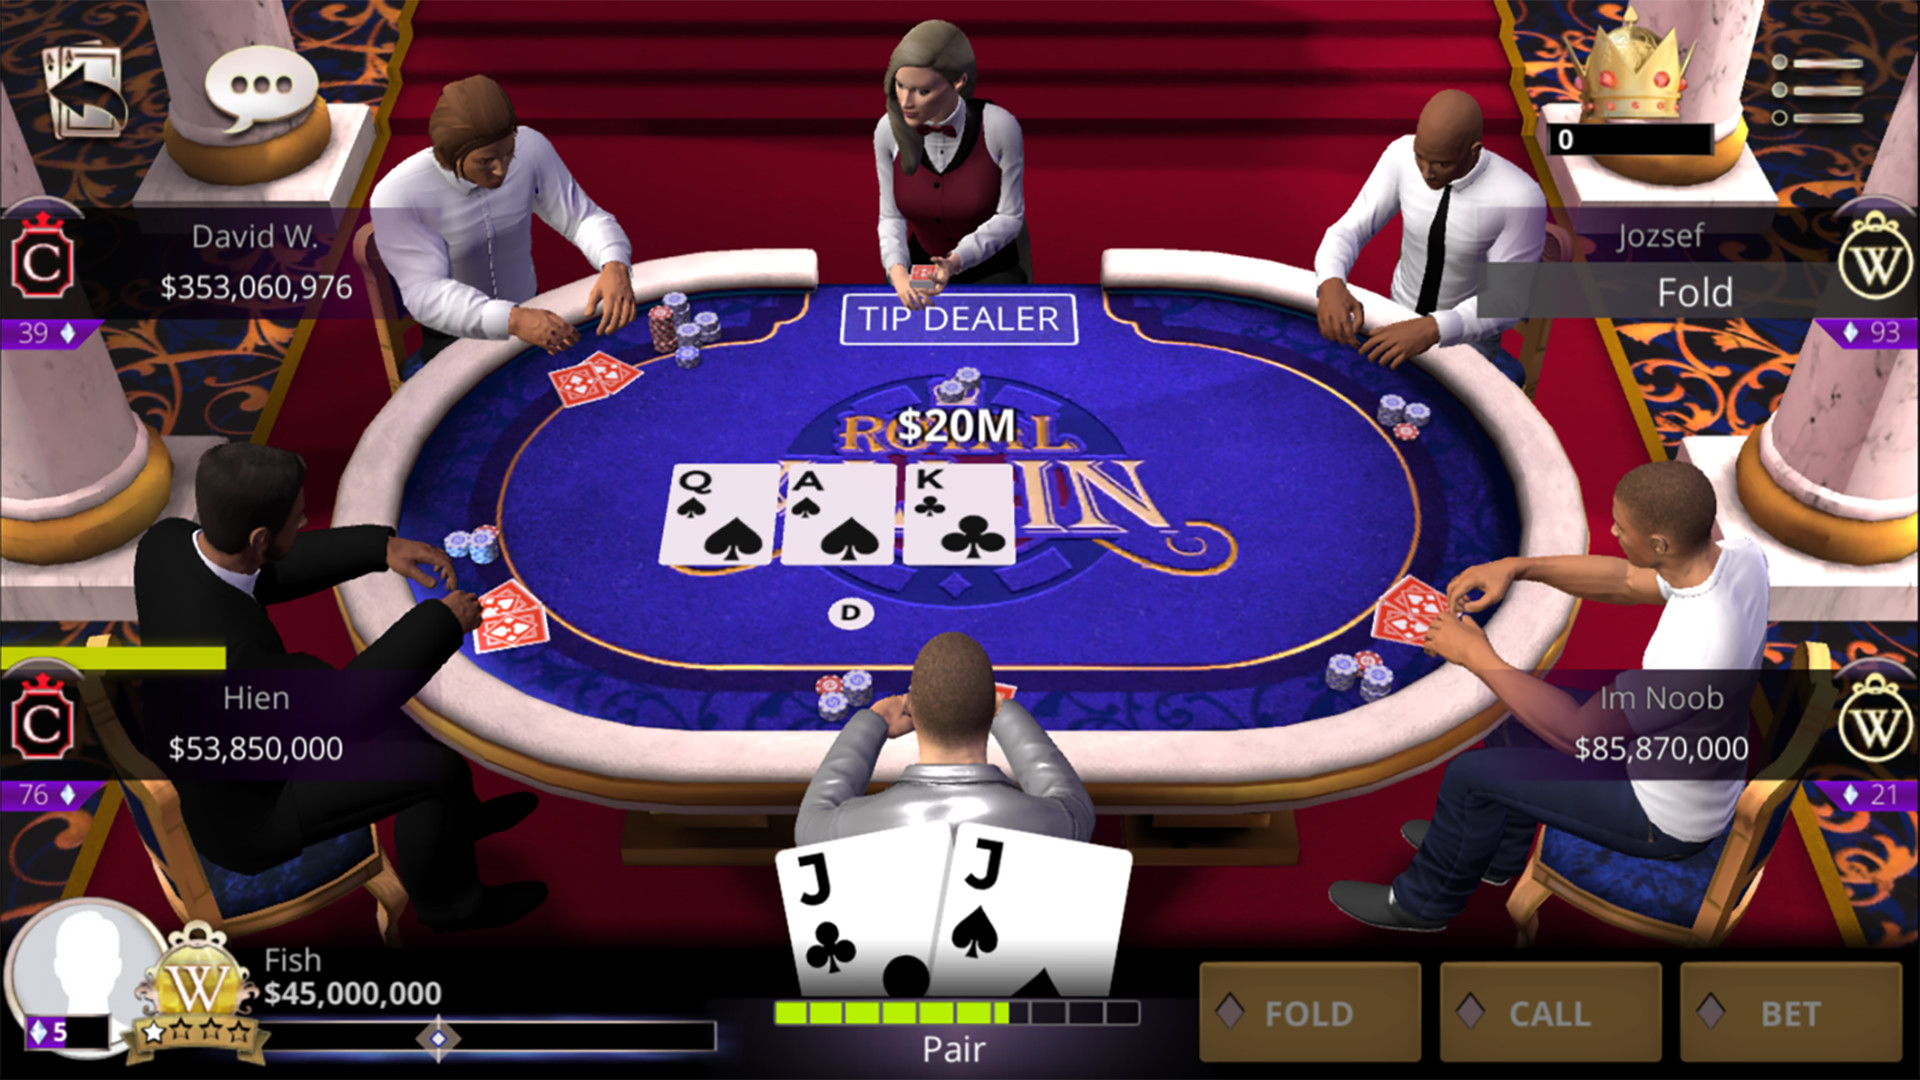 Play Live Poker Online free, POKER